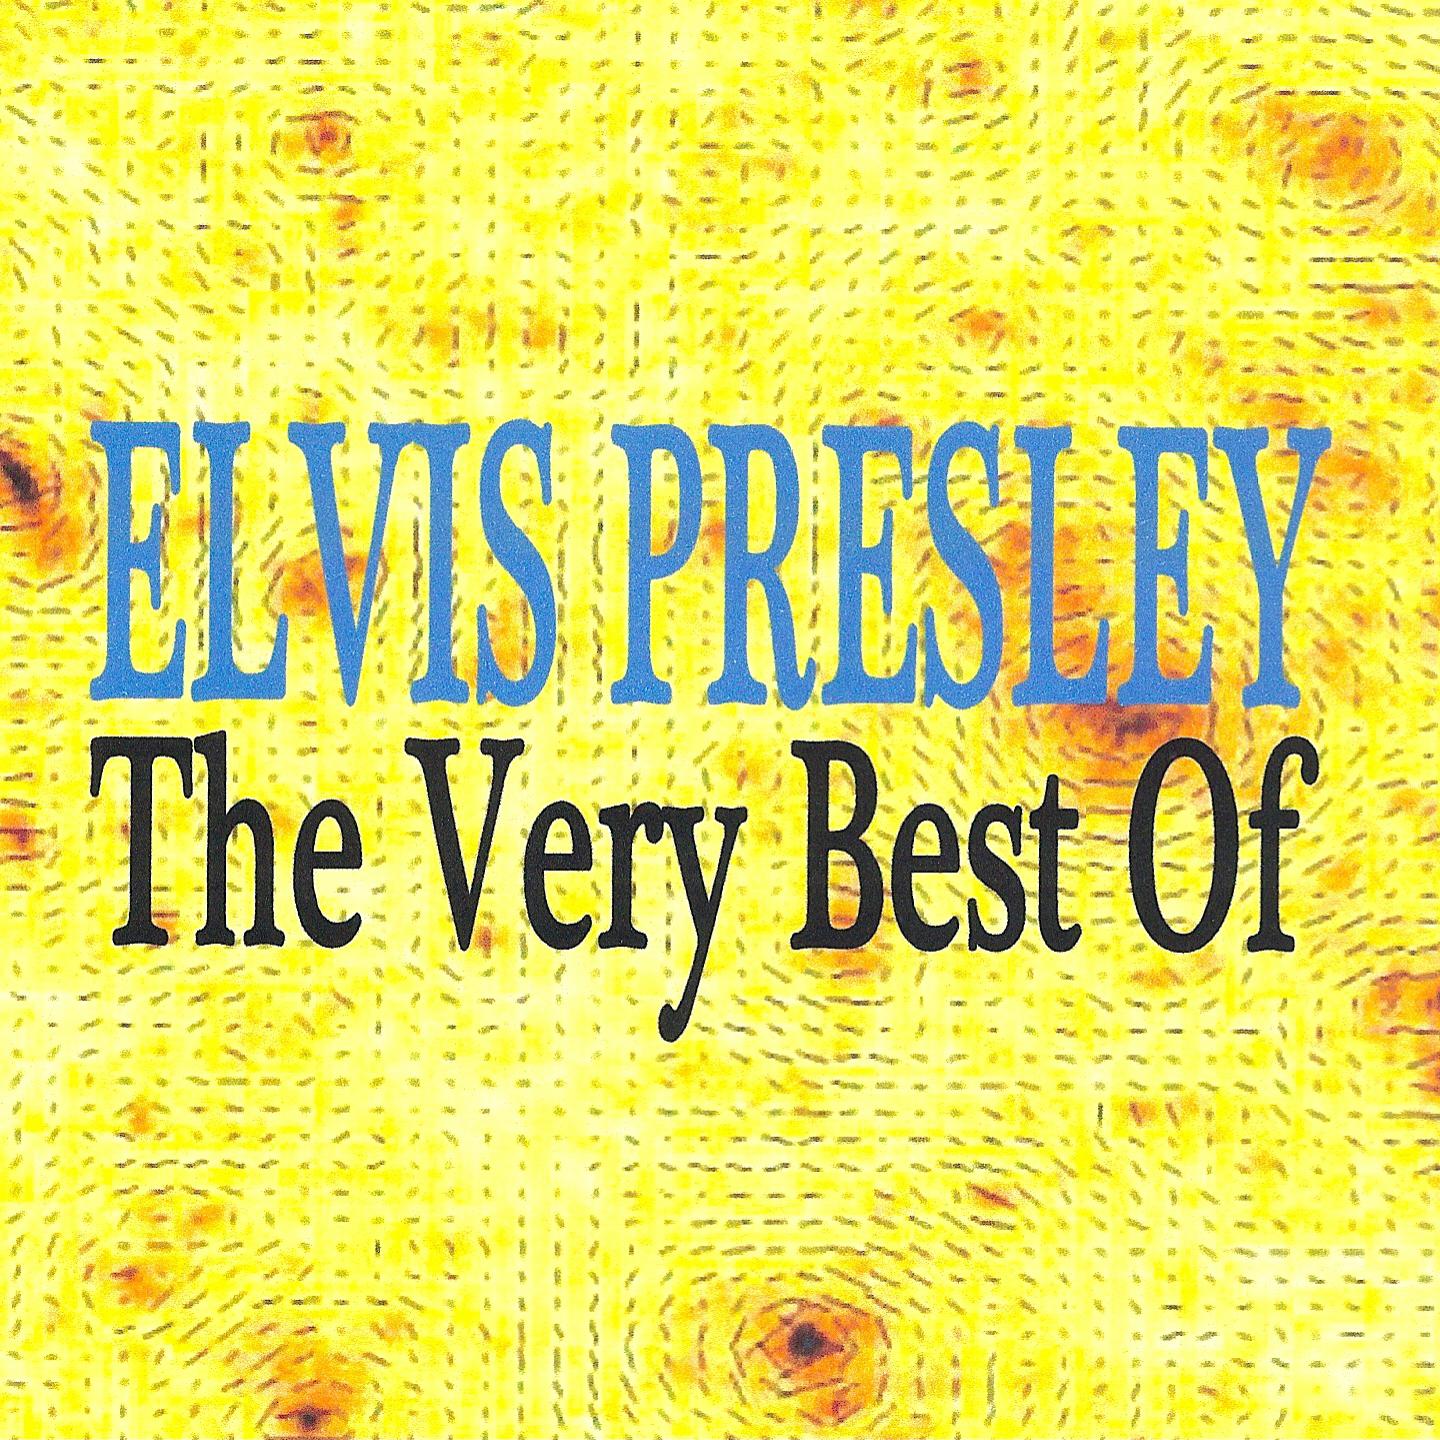 Elvis Presley - Blueberry Hill